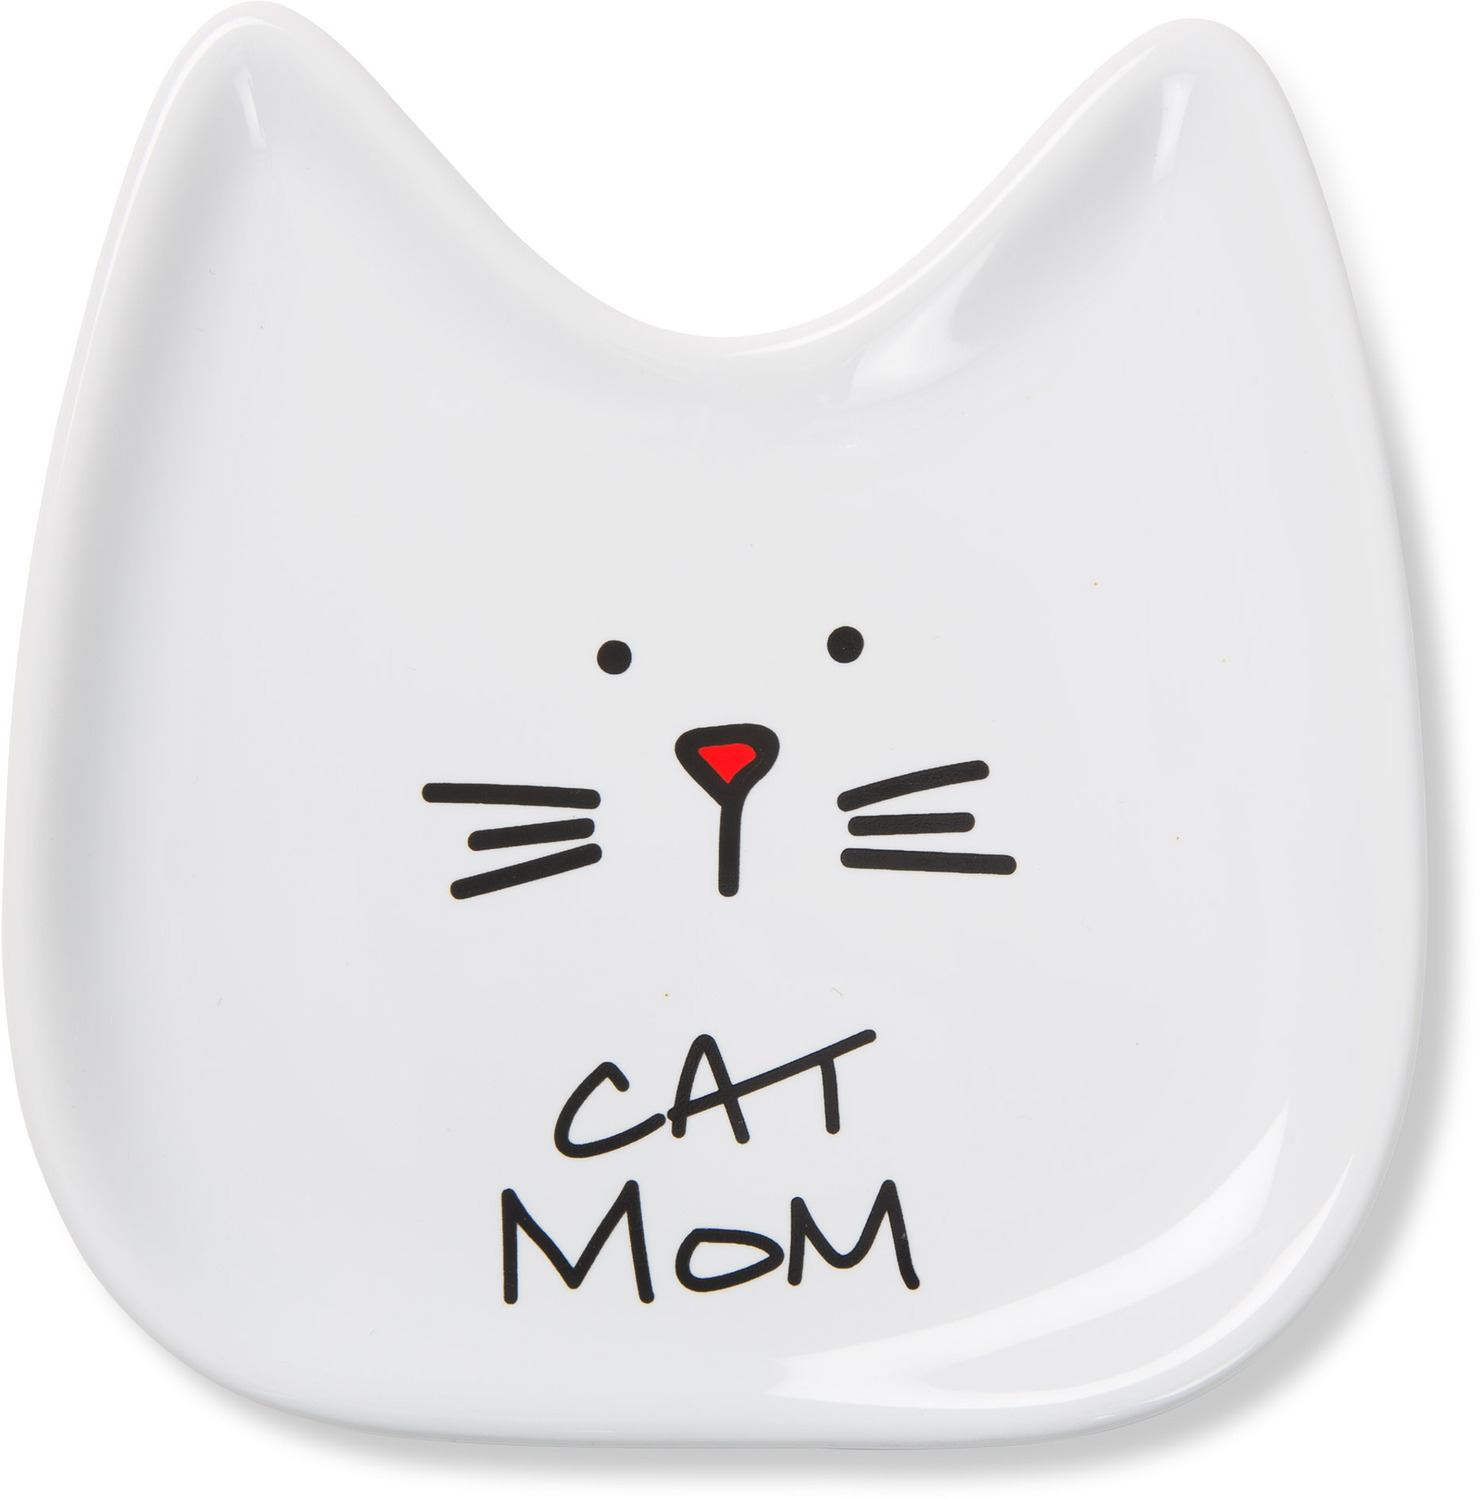 Cat Mom by Blobby Cat - Cat Mom - 5" Ceramic Spoon Rest